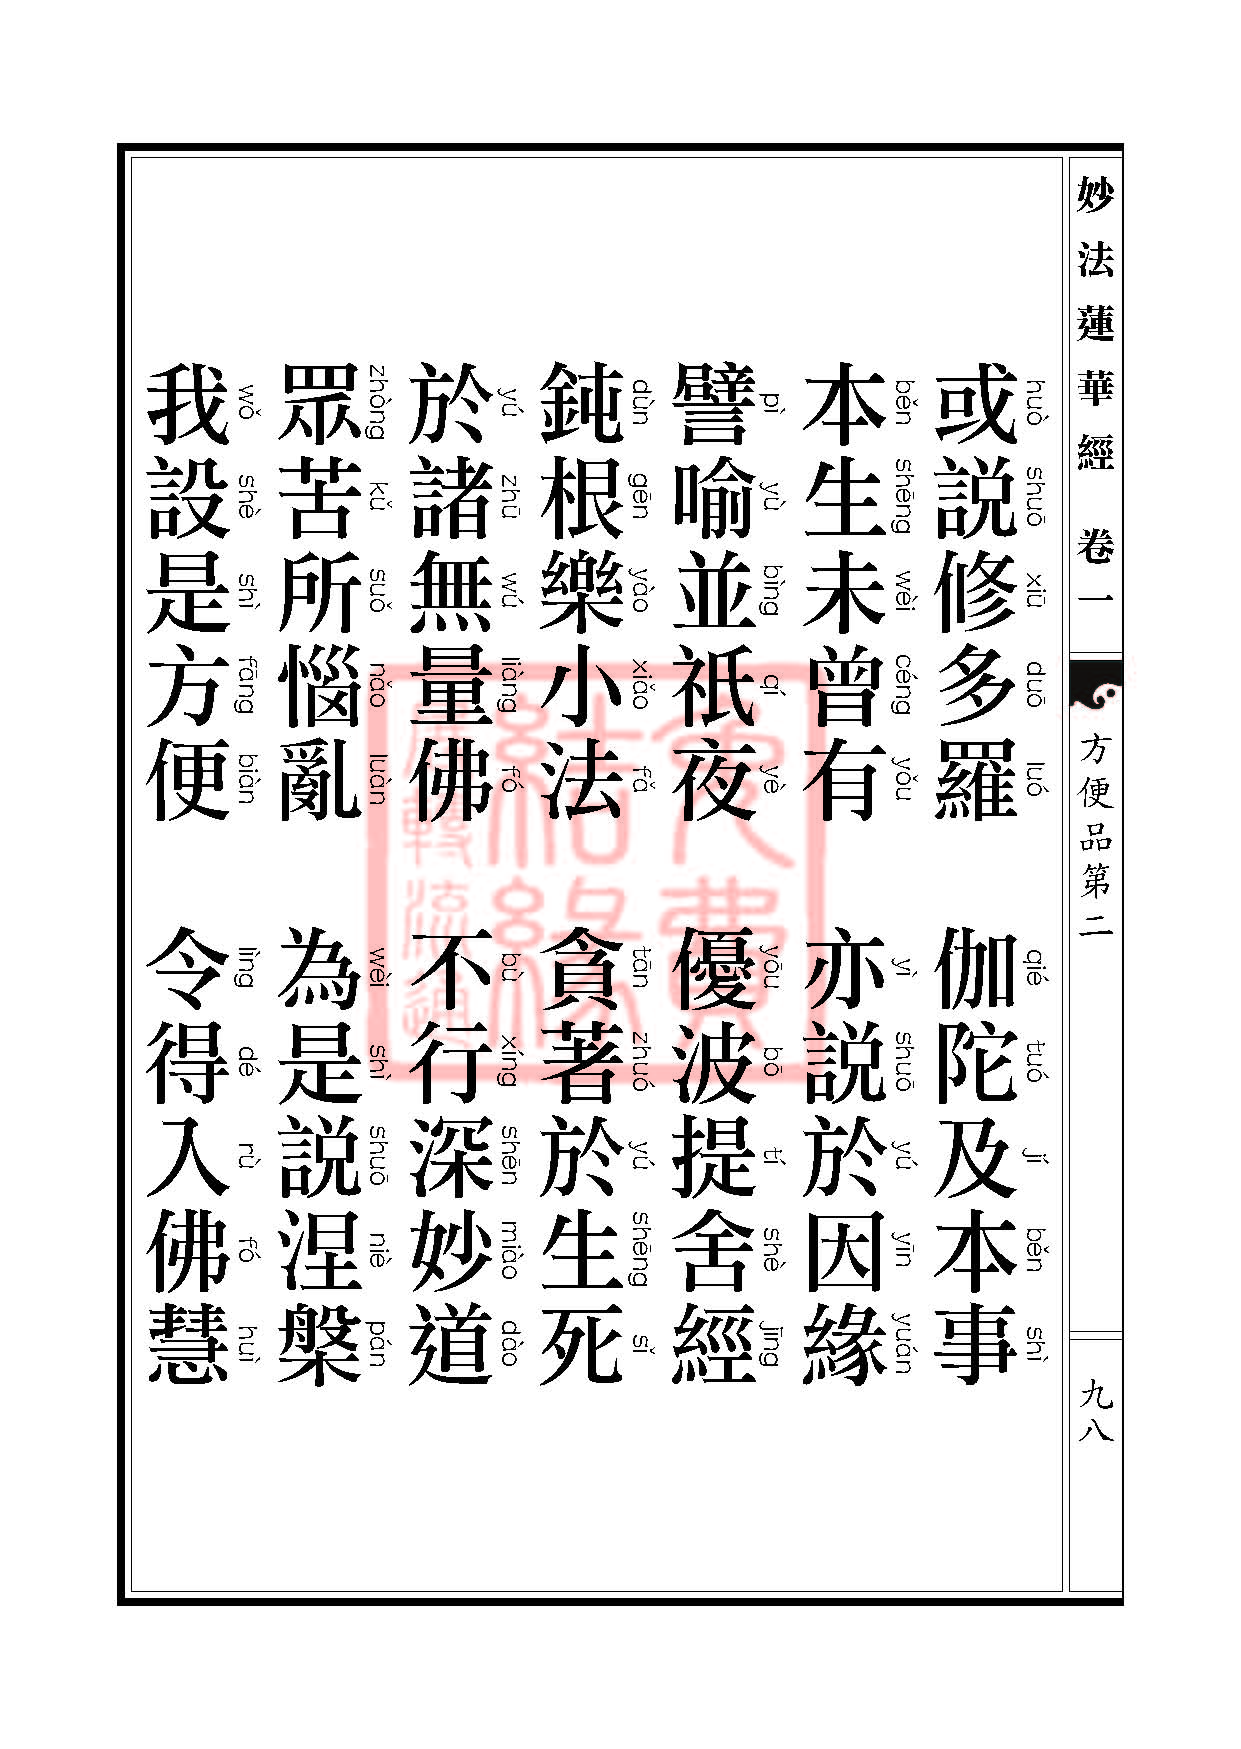 Book_FHJ_HK-A6-PY_Web_页面_098.jpg